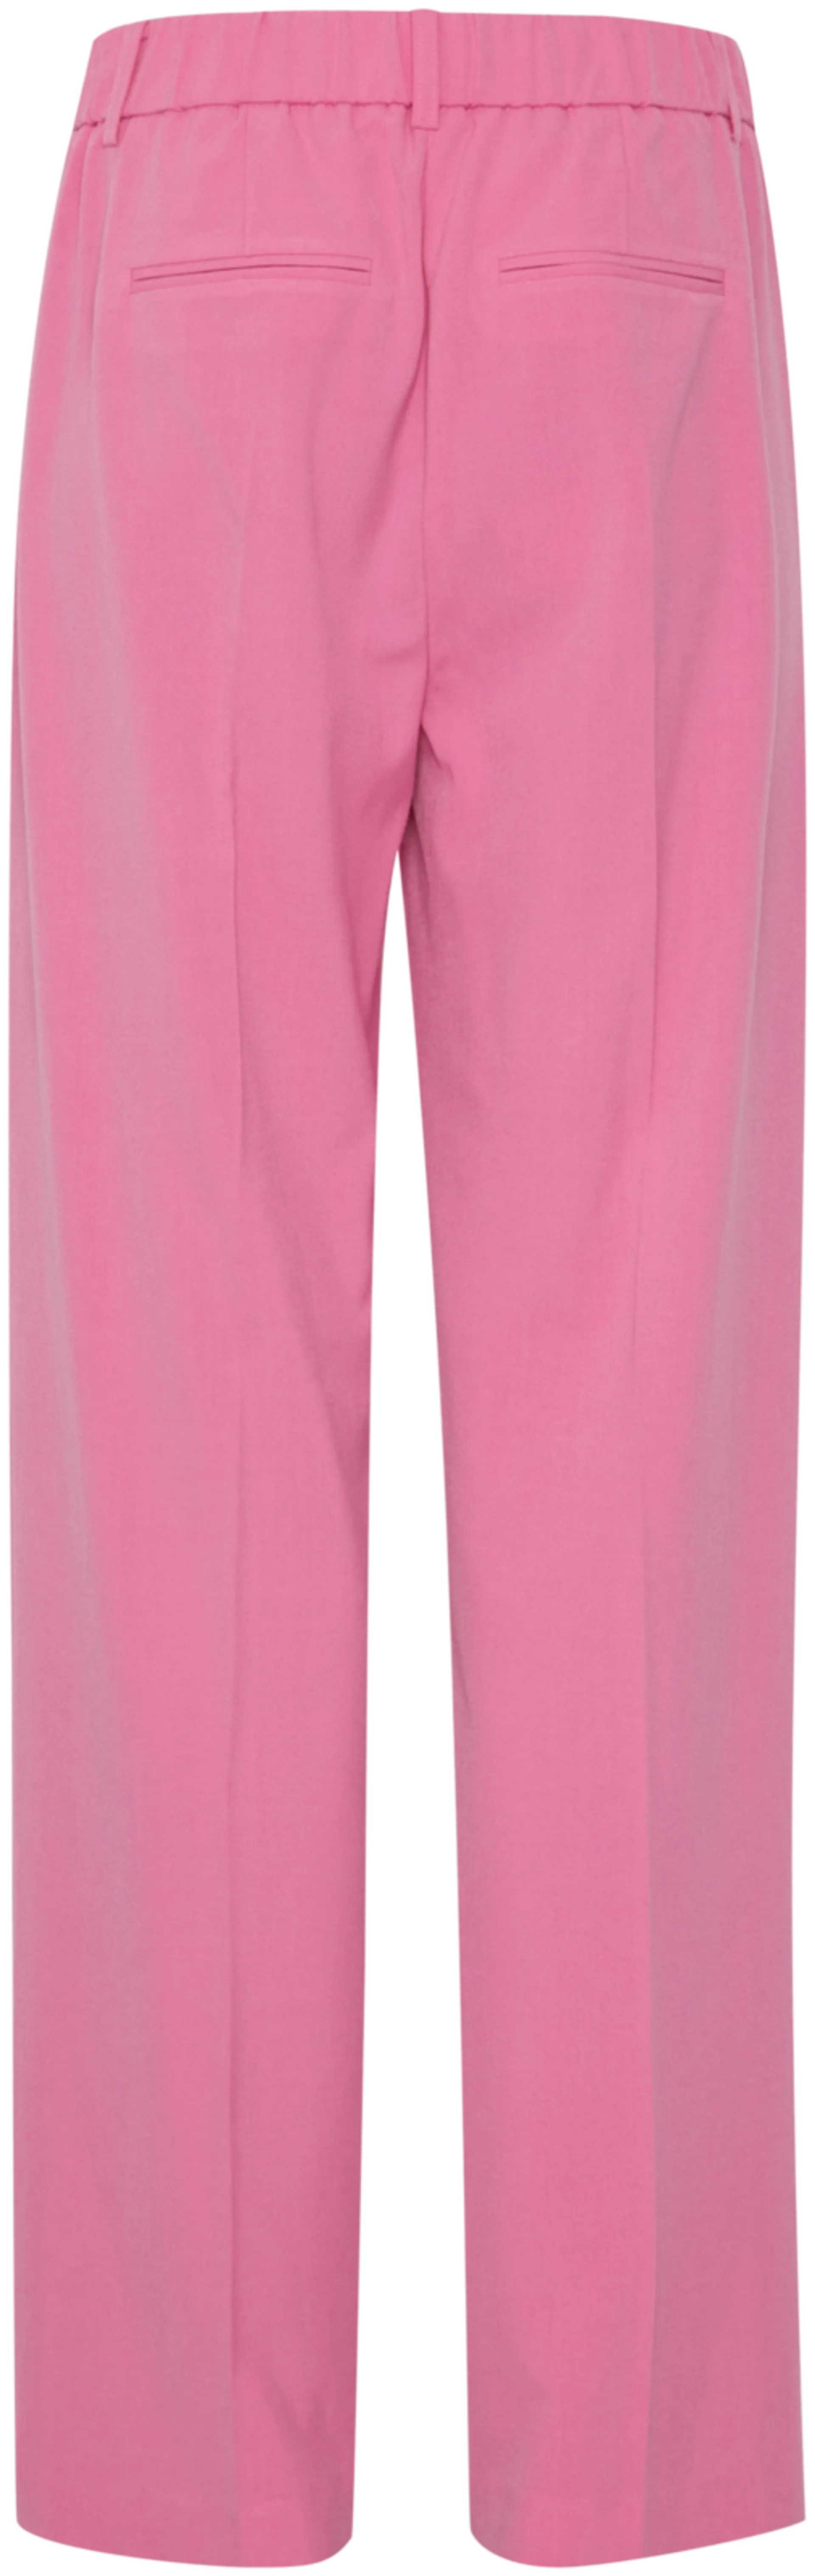 B.young naisten housut Bydanta wide - Super Pink - 2